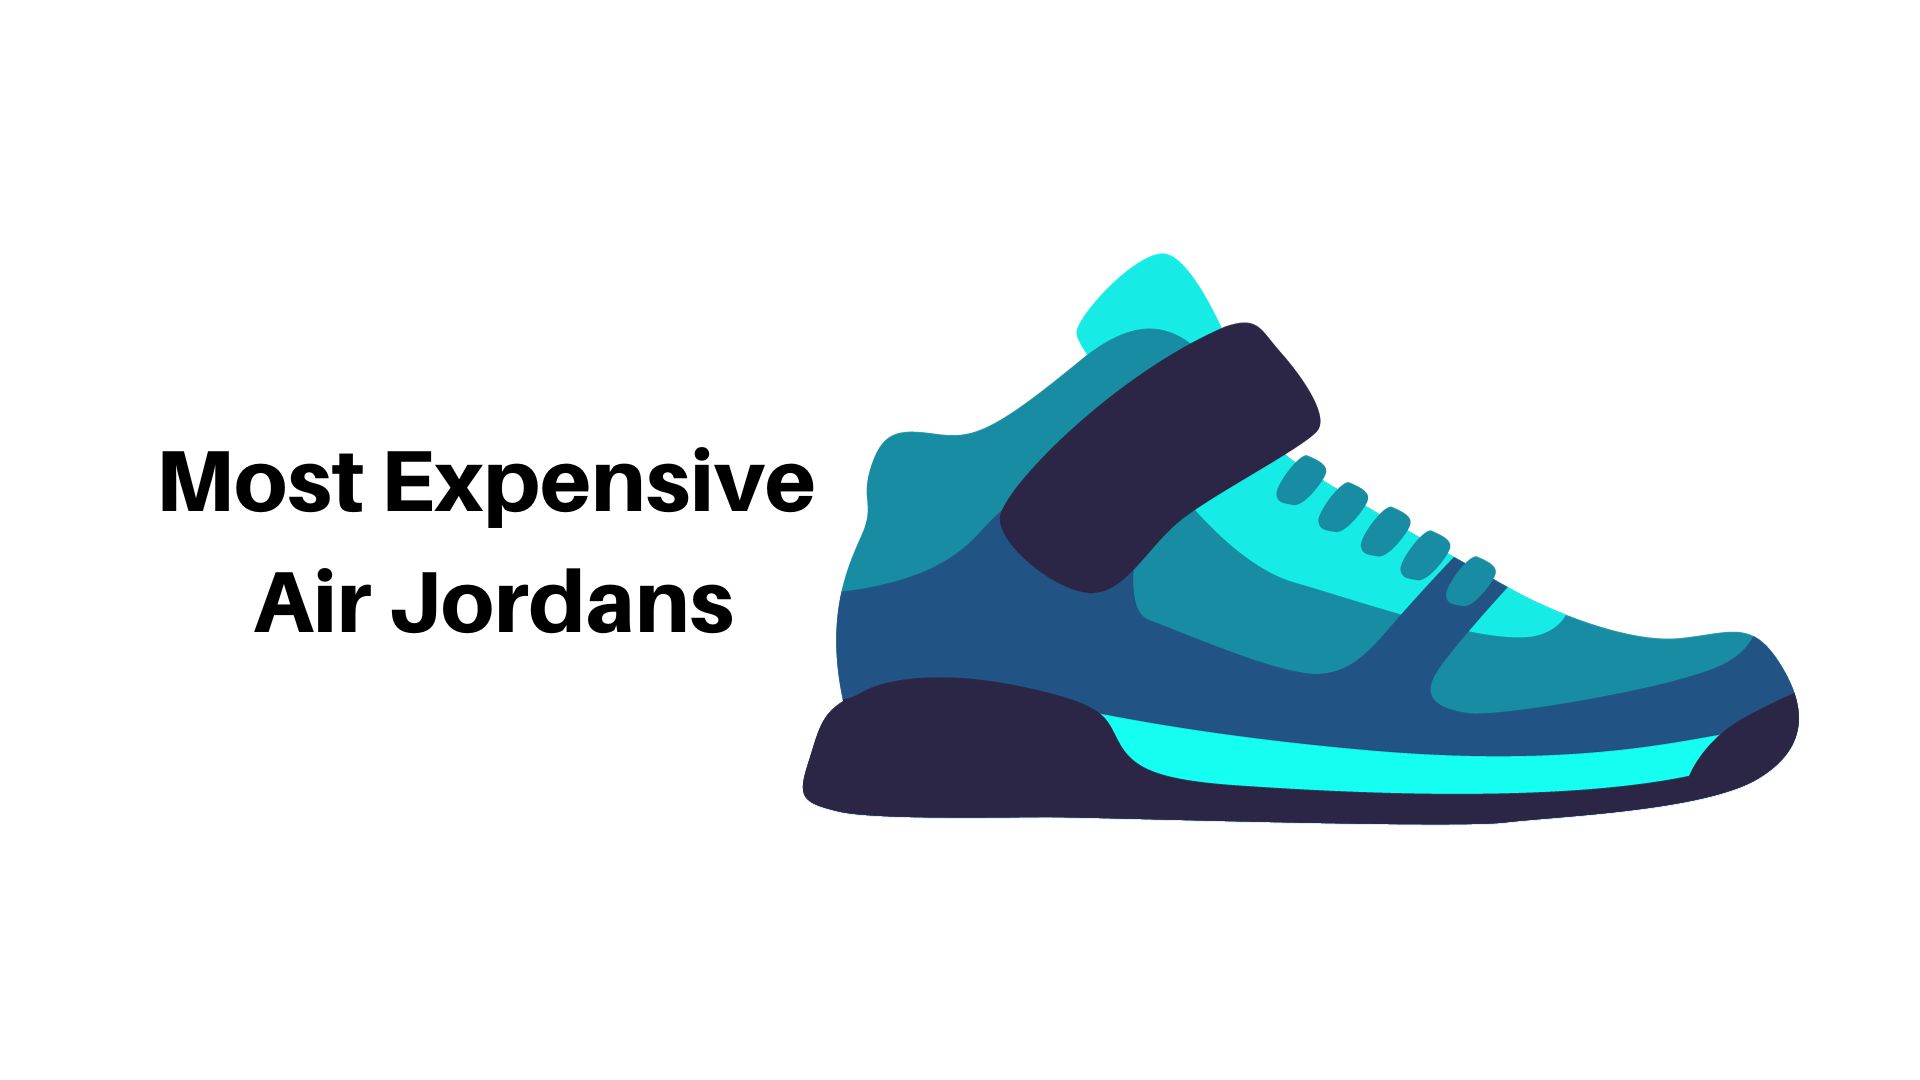 Michael Jordan's 'Last Dance' shoes most expensive sneakers ever sold